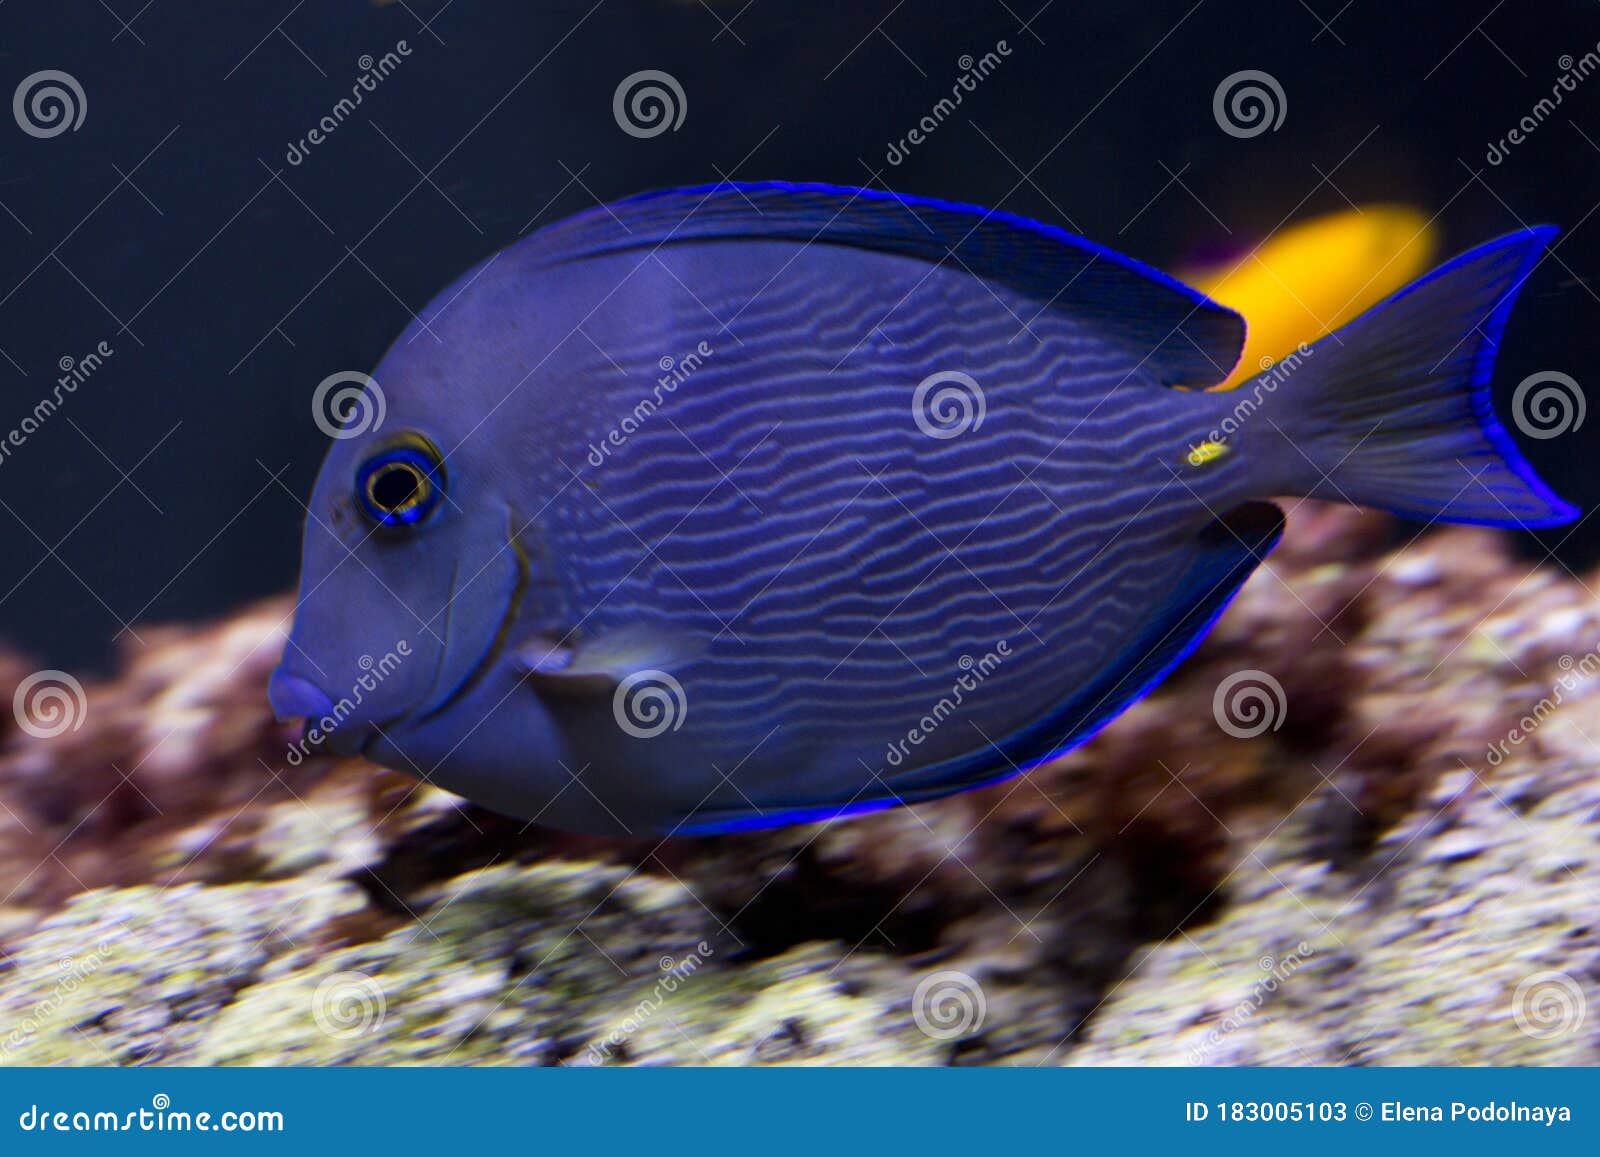 https://thumbs.dreamstime.com/z/atlantic-blue-tang-blue-barber-blue-doctorfish-blue-tang-surgeonfish-yellow-barber-yellow-doctorfish-acanthurus-coeruleus-183005103.jpg